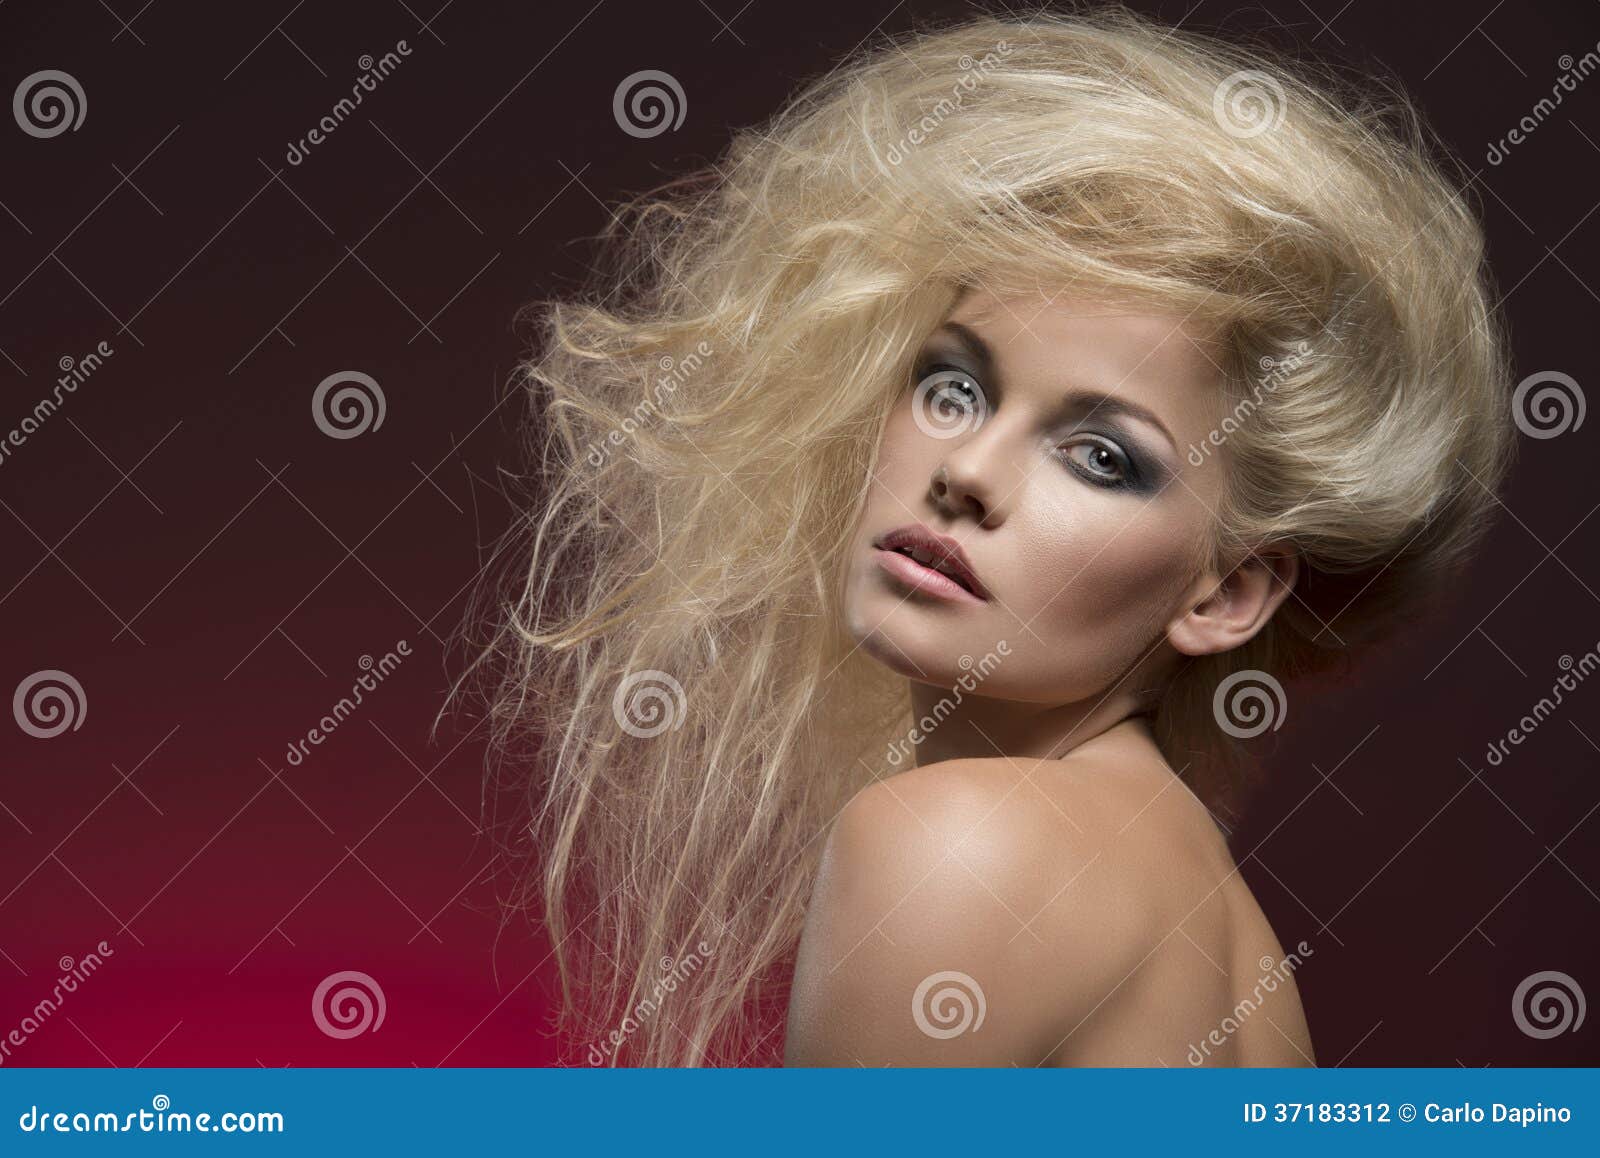 Bushy blonde hair girl - wide 5